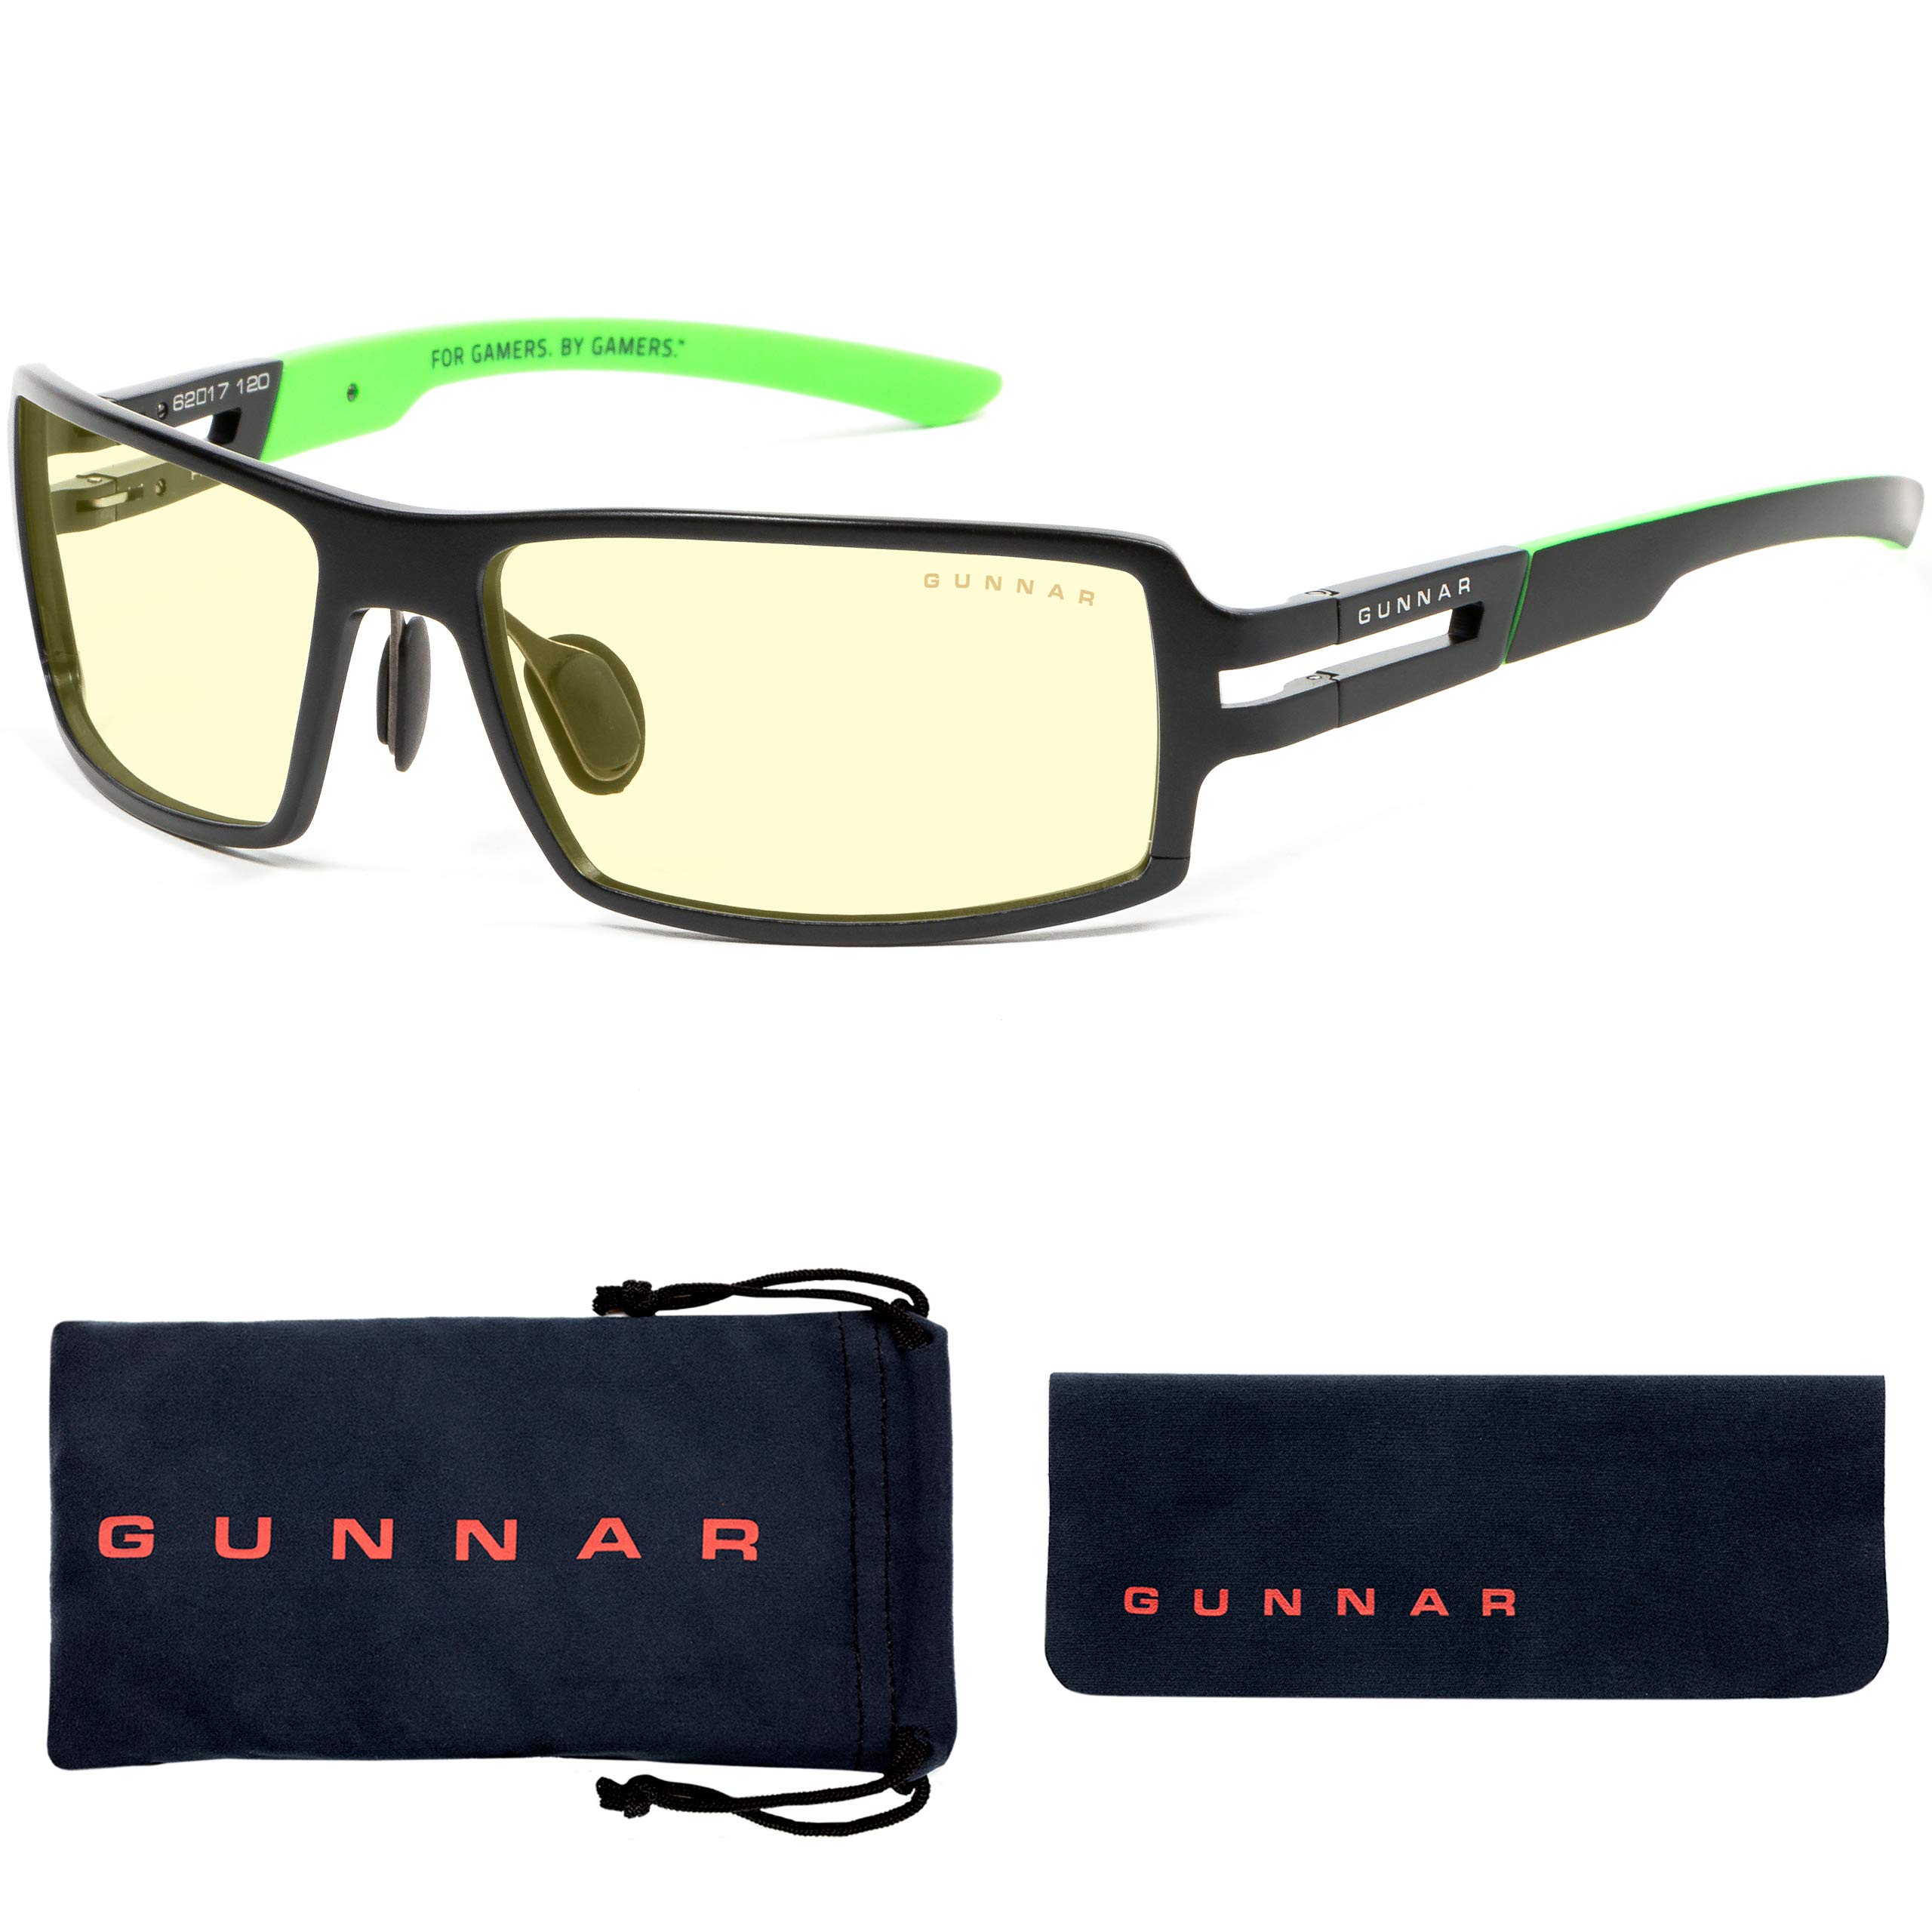 GUNNAR - Premium Gaming and Computer Glasses - Blocks 65% Blue Light - RPG Razer Edition, Onyx, Amber Tint